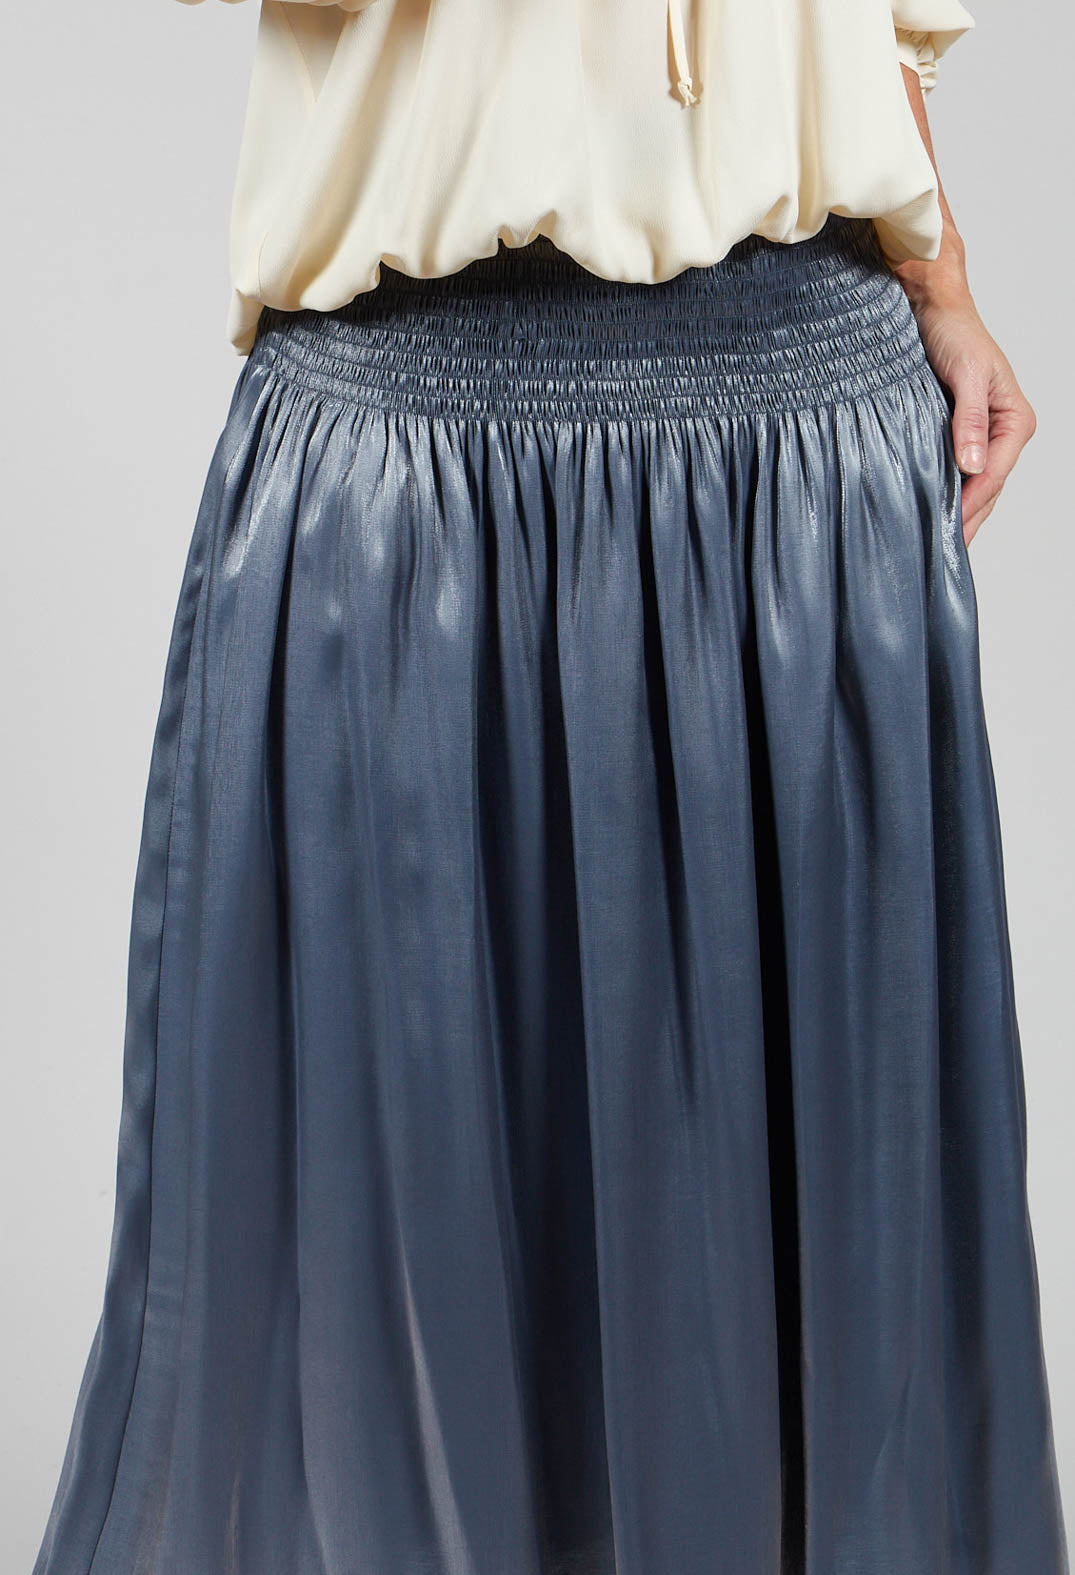 Shirred Waistband Skirt in Blue